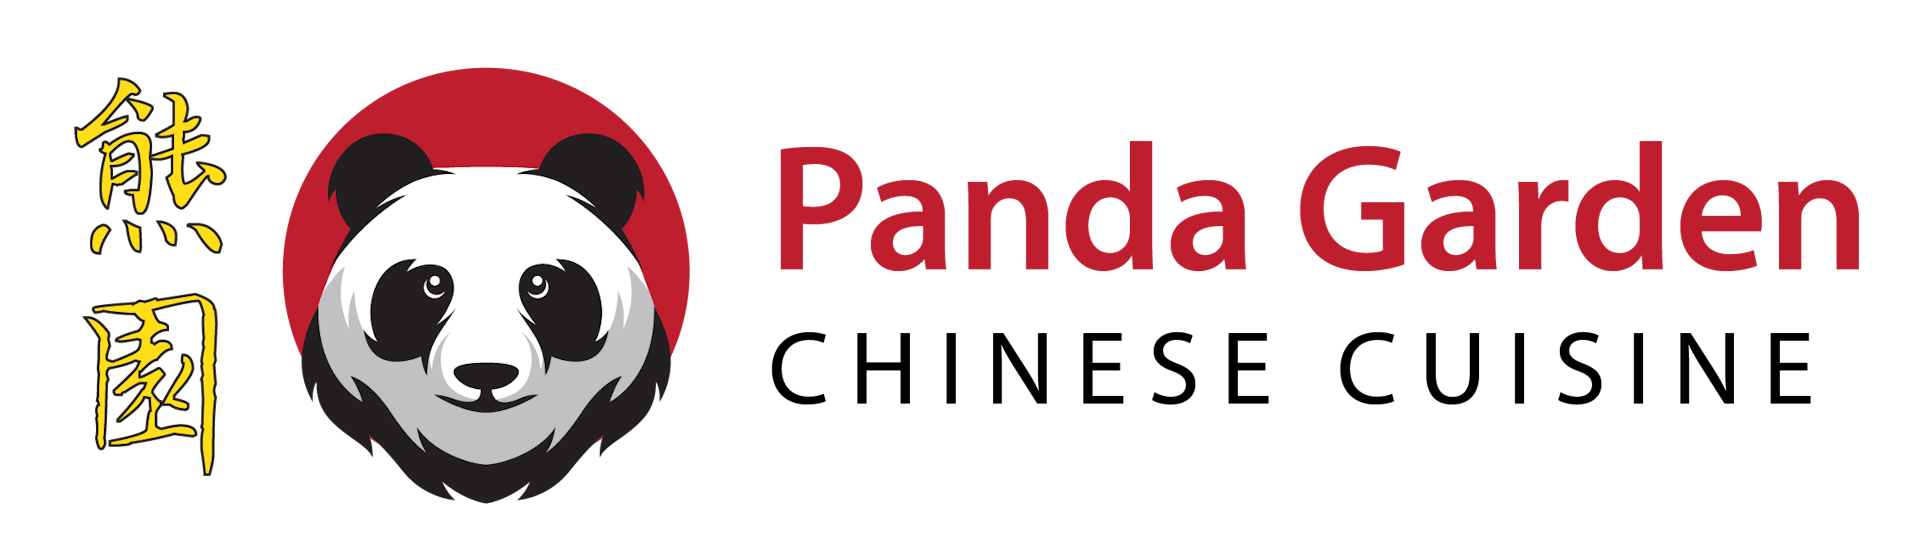 Panda Garden Thornton Co 80229 Menu Order Online